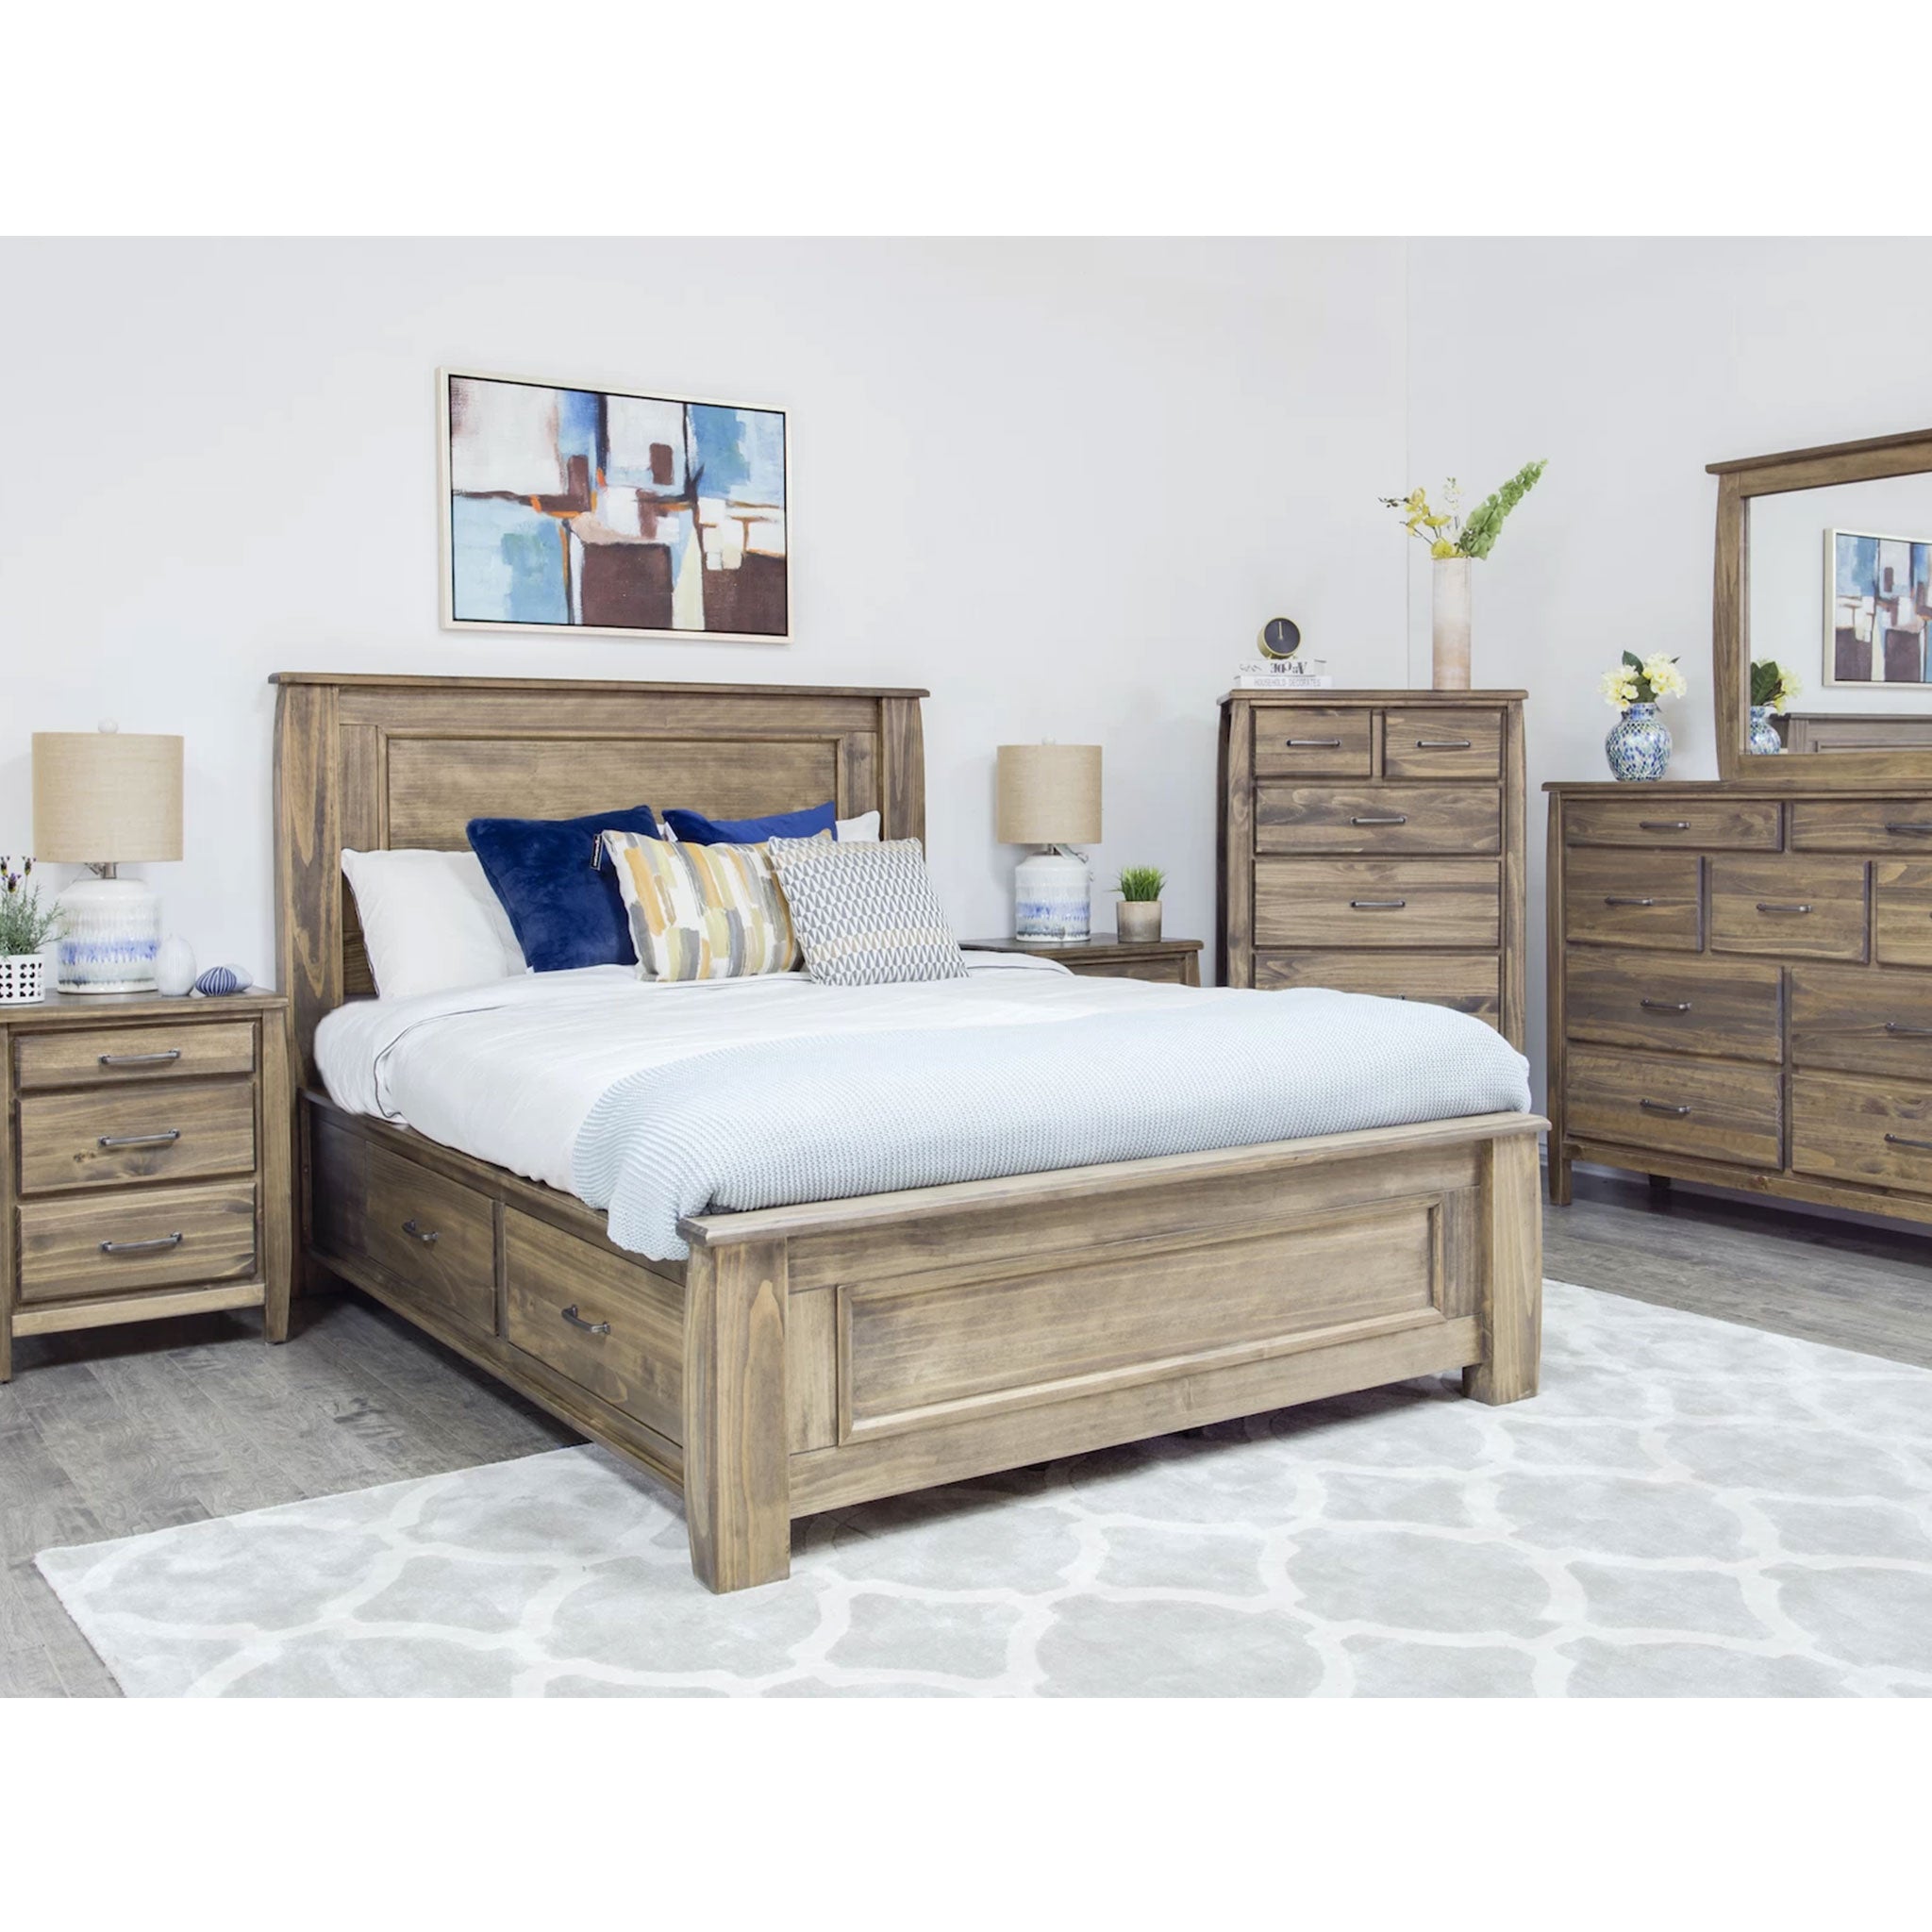 Tofino 4 Piece Bedroom Set with Storage Bed